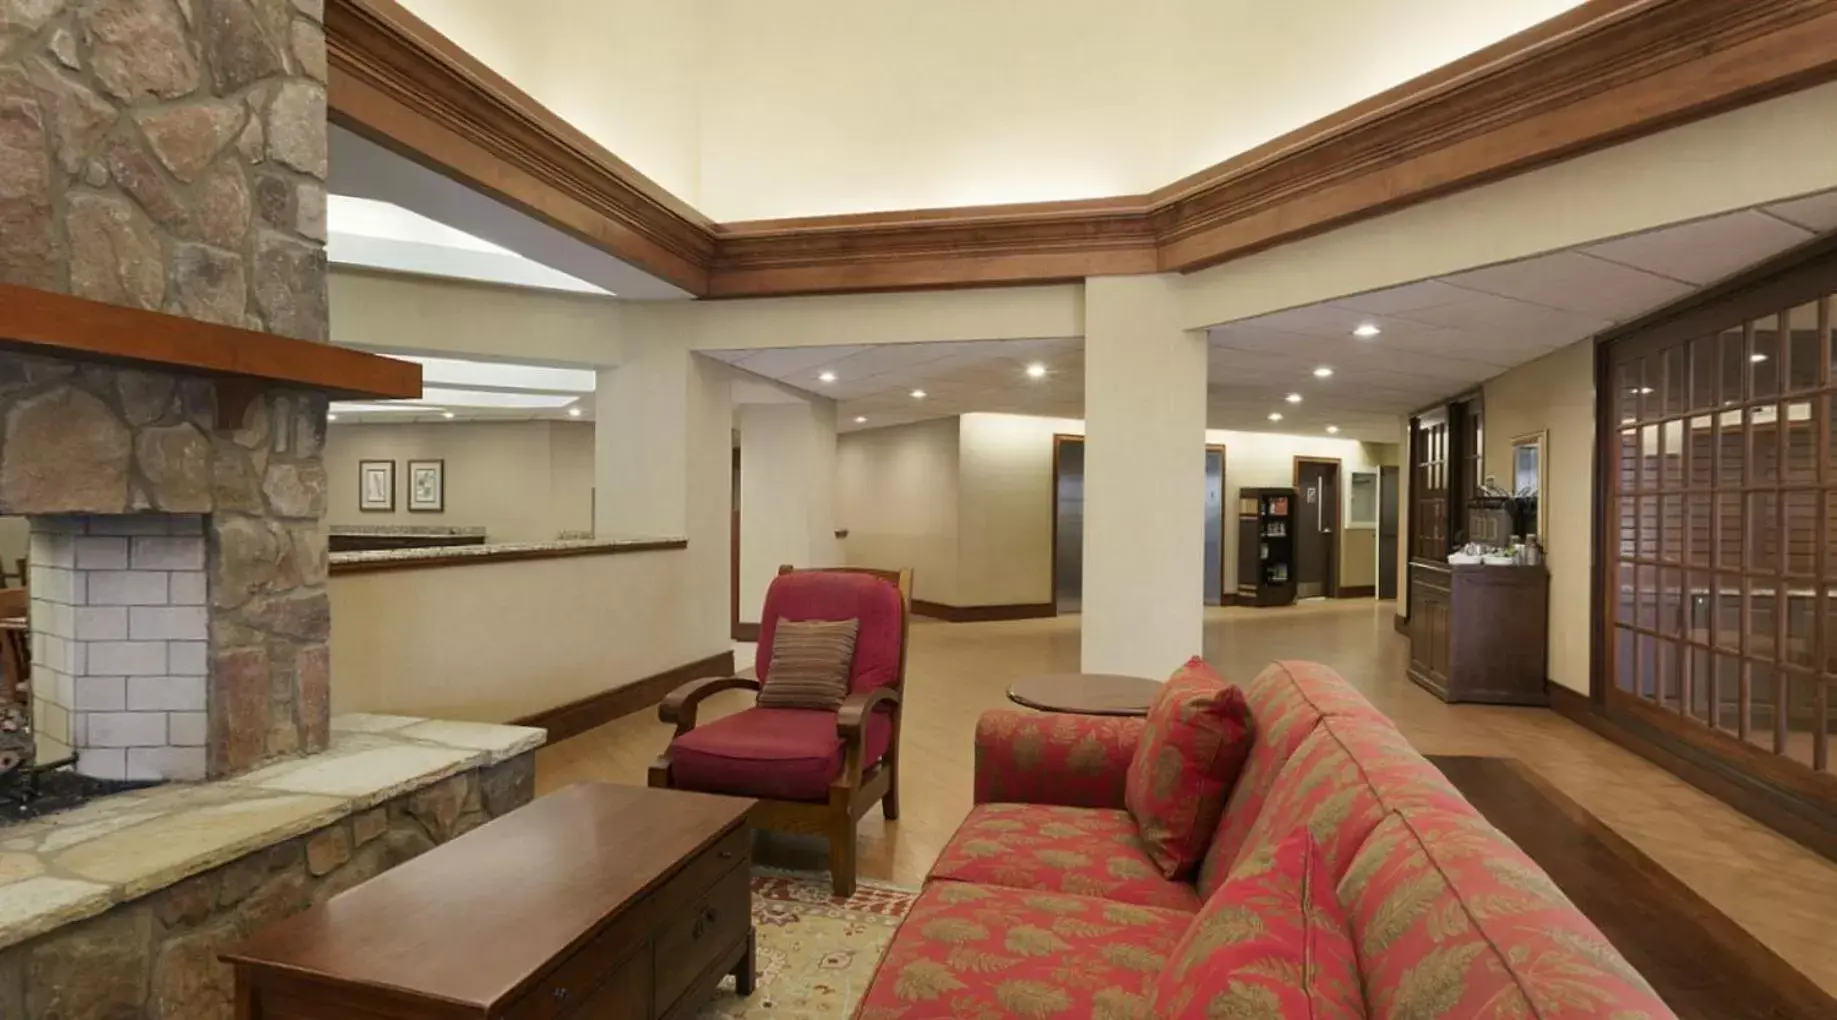 Lobby or reception in Country Inn & Suites by Radisson, Atlanta Galleria Ballpark, GA